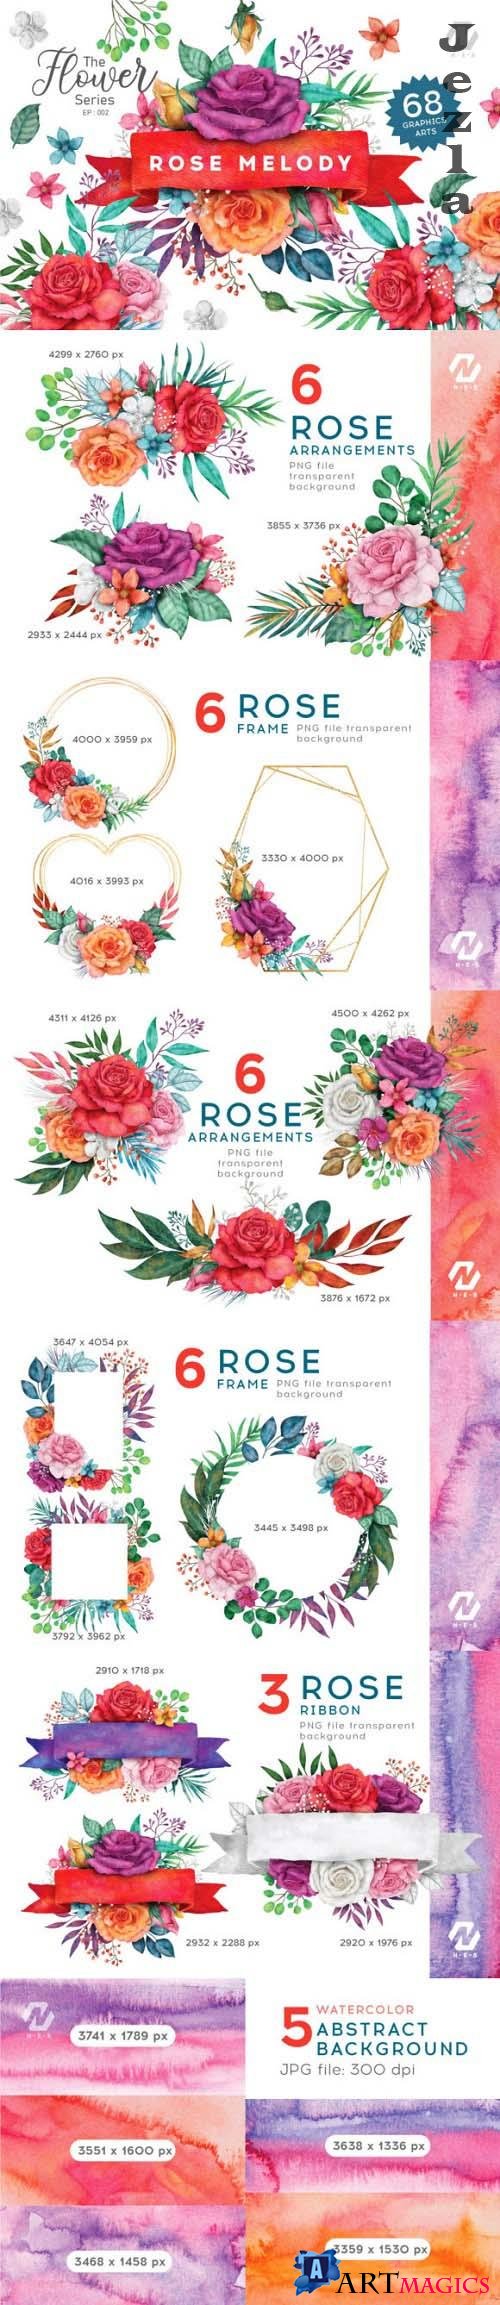 Rose Flower Watercolor Colorful Arts